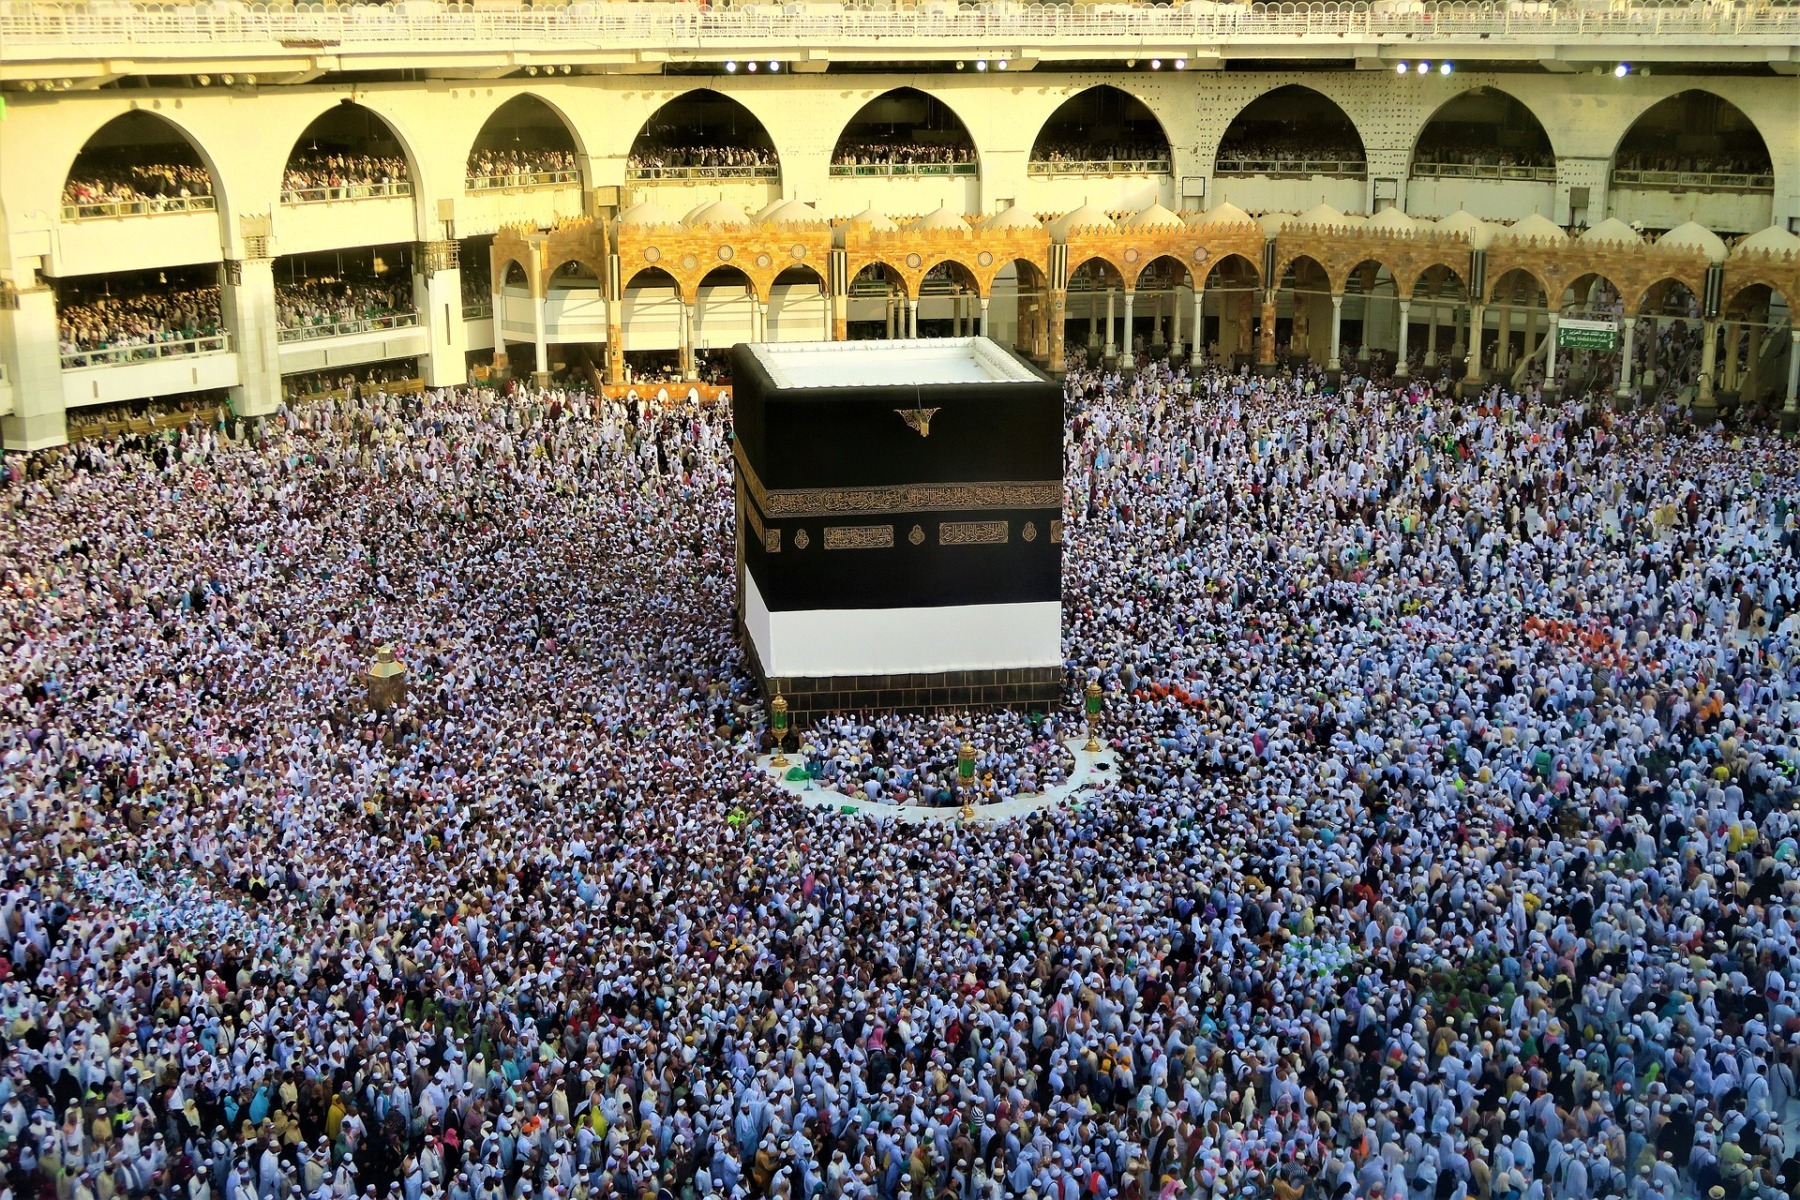 moschee, mecca, islam